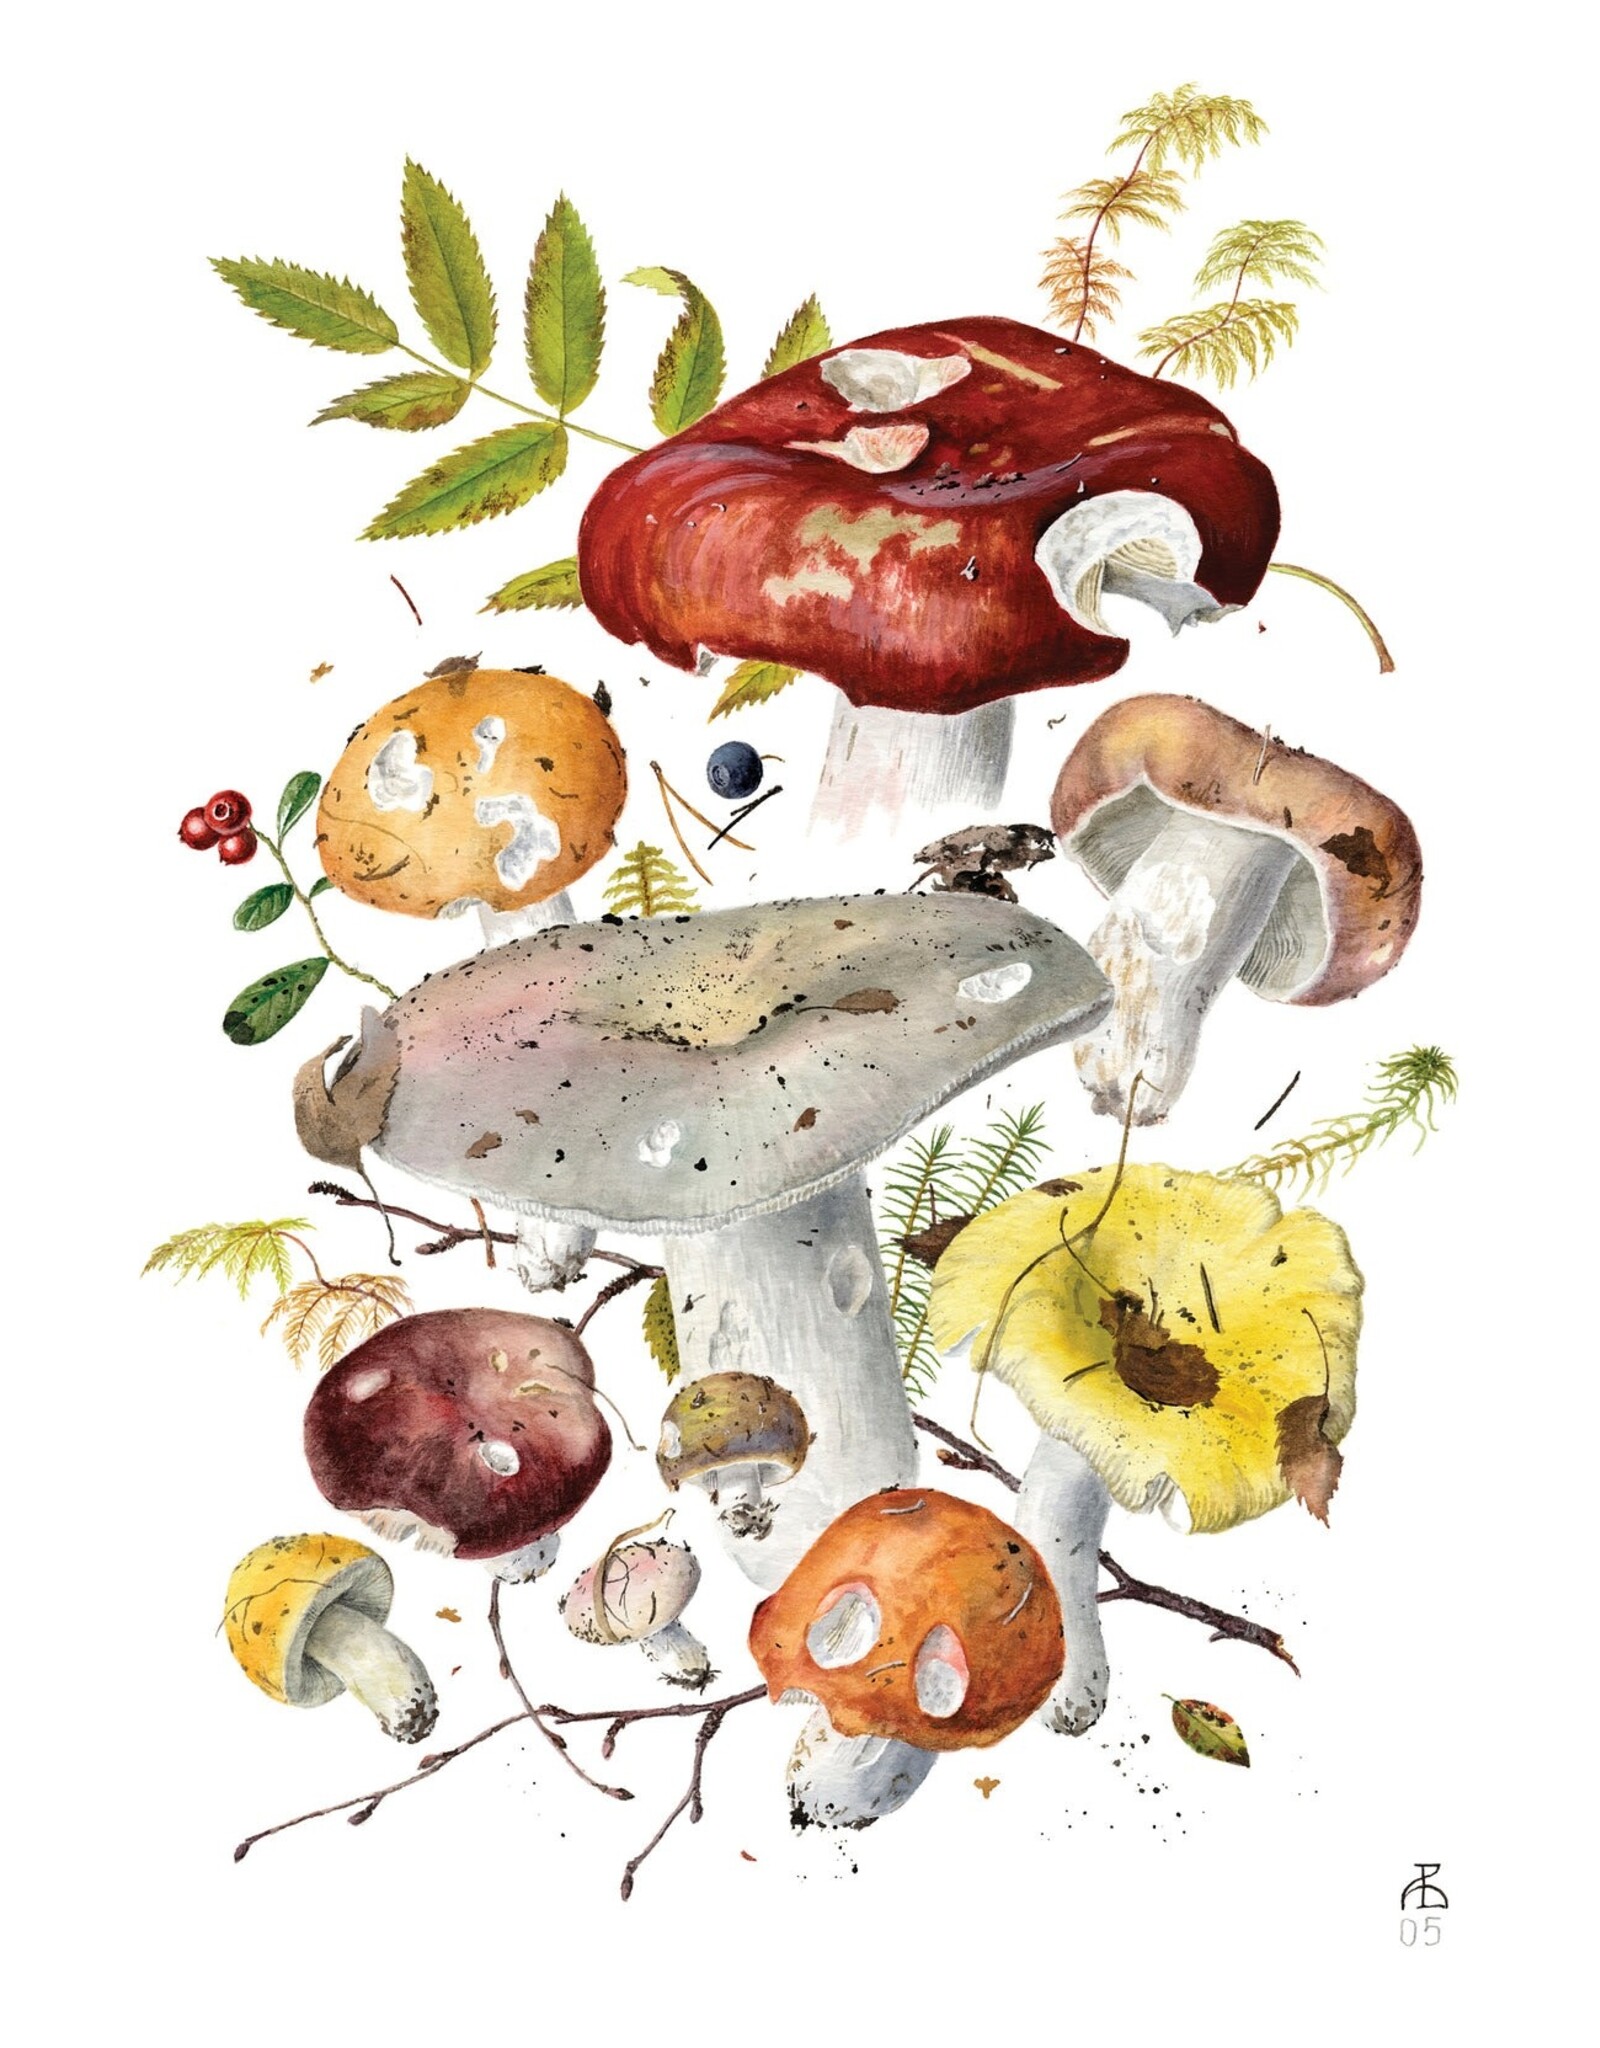 Mushrooms: Alexander Viazmensky Boxed Notecards